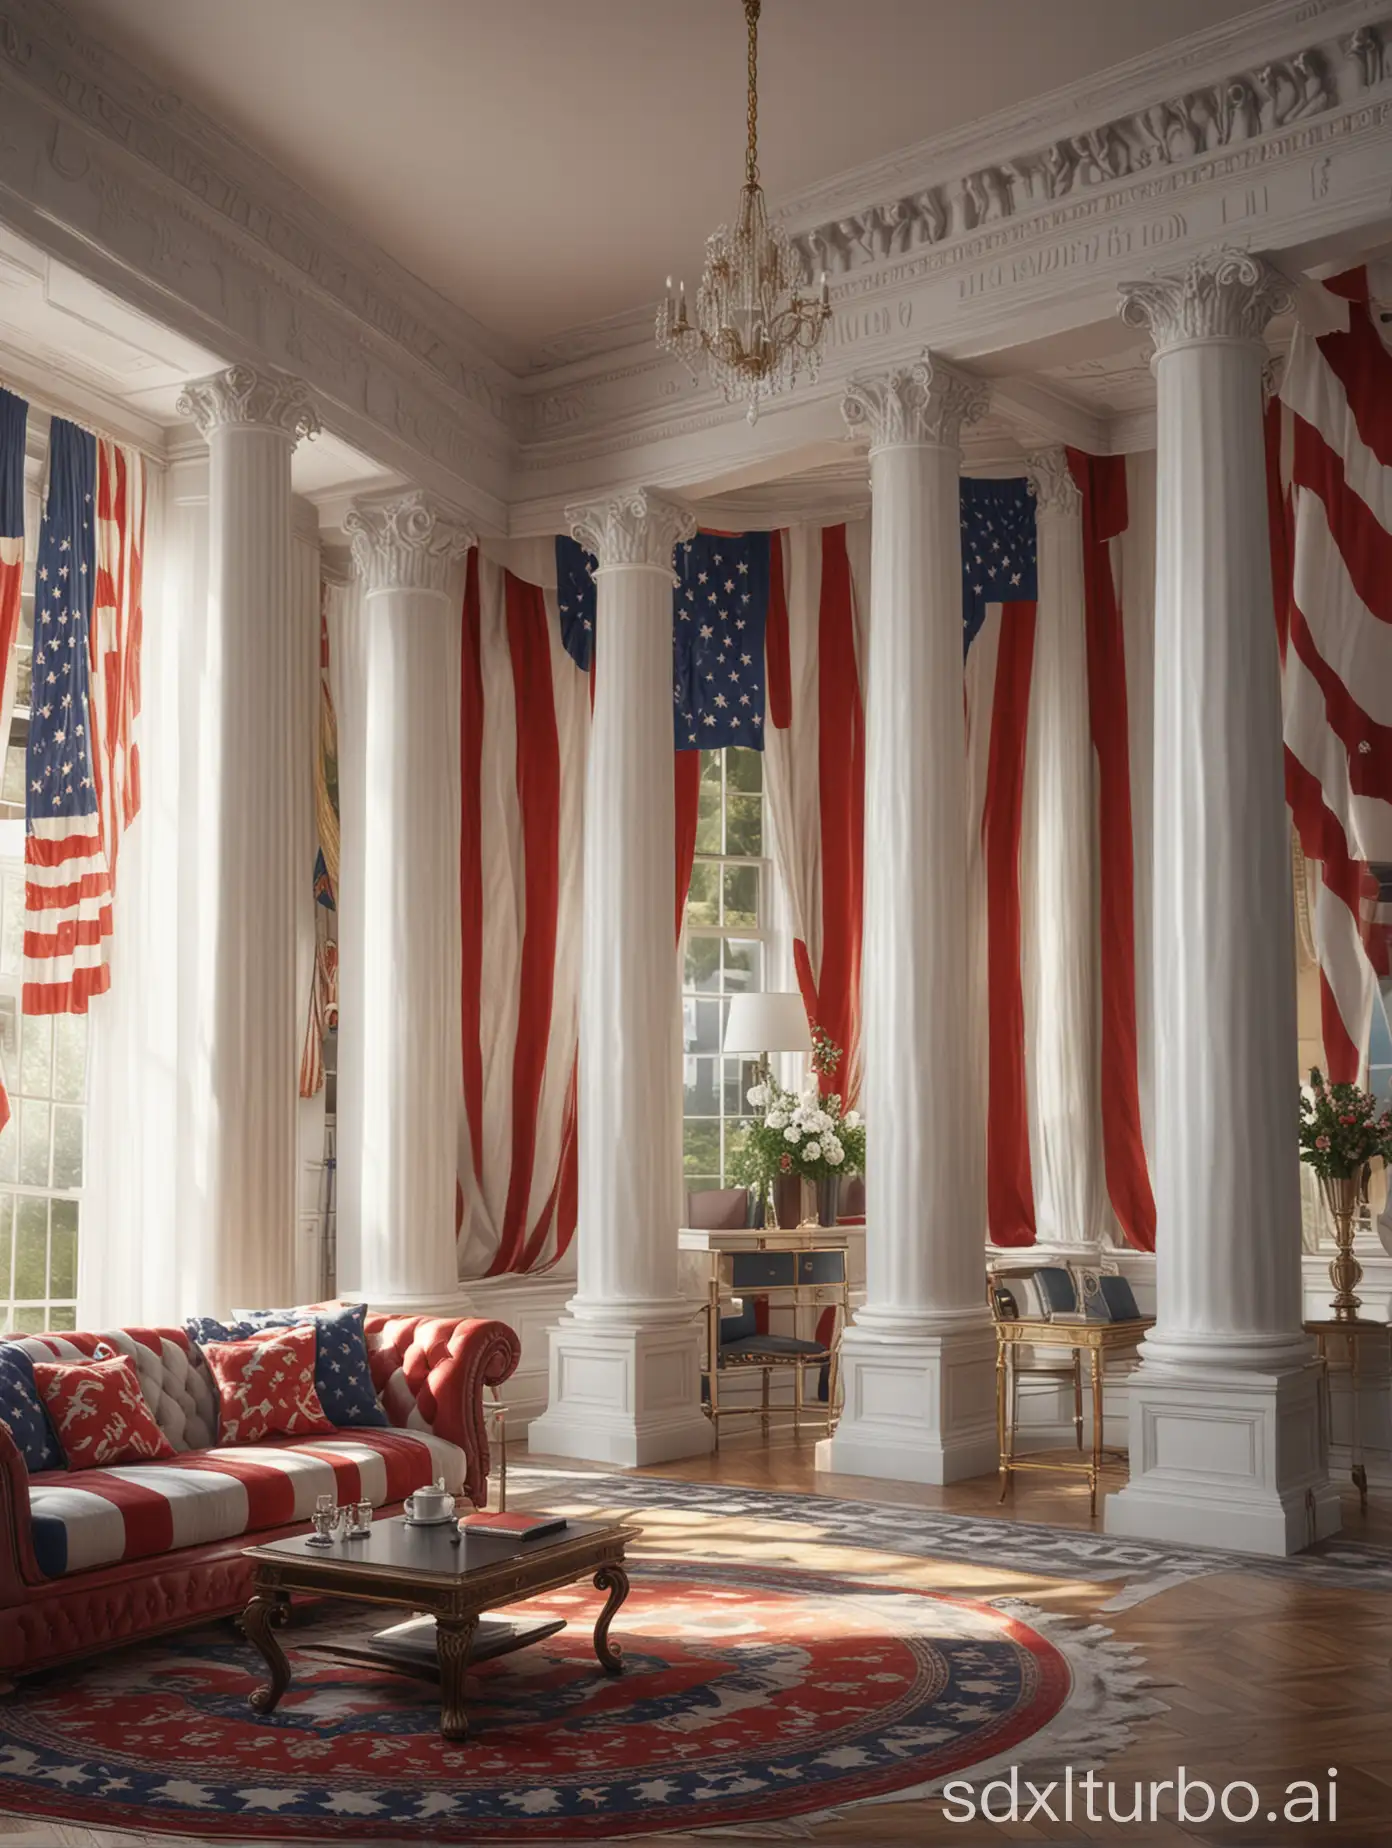 Whitehouse Wallpaper, Photorealistic, 8k, epic, animation, patriotic, glamourus, vibrant